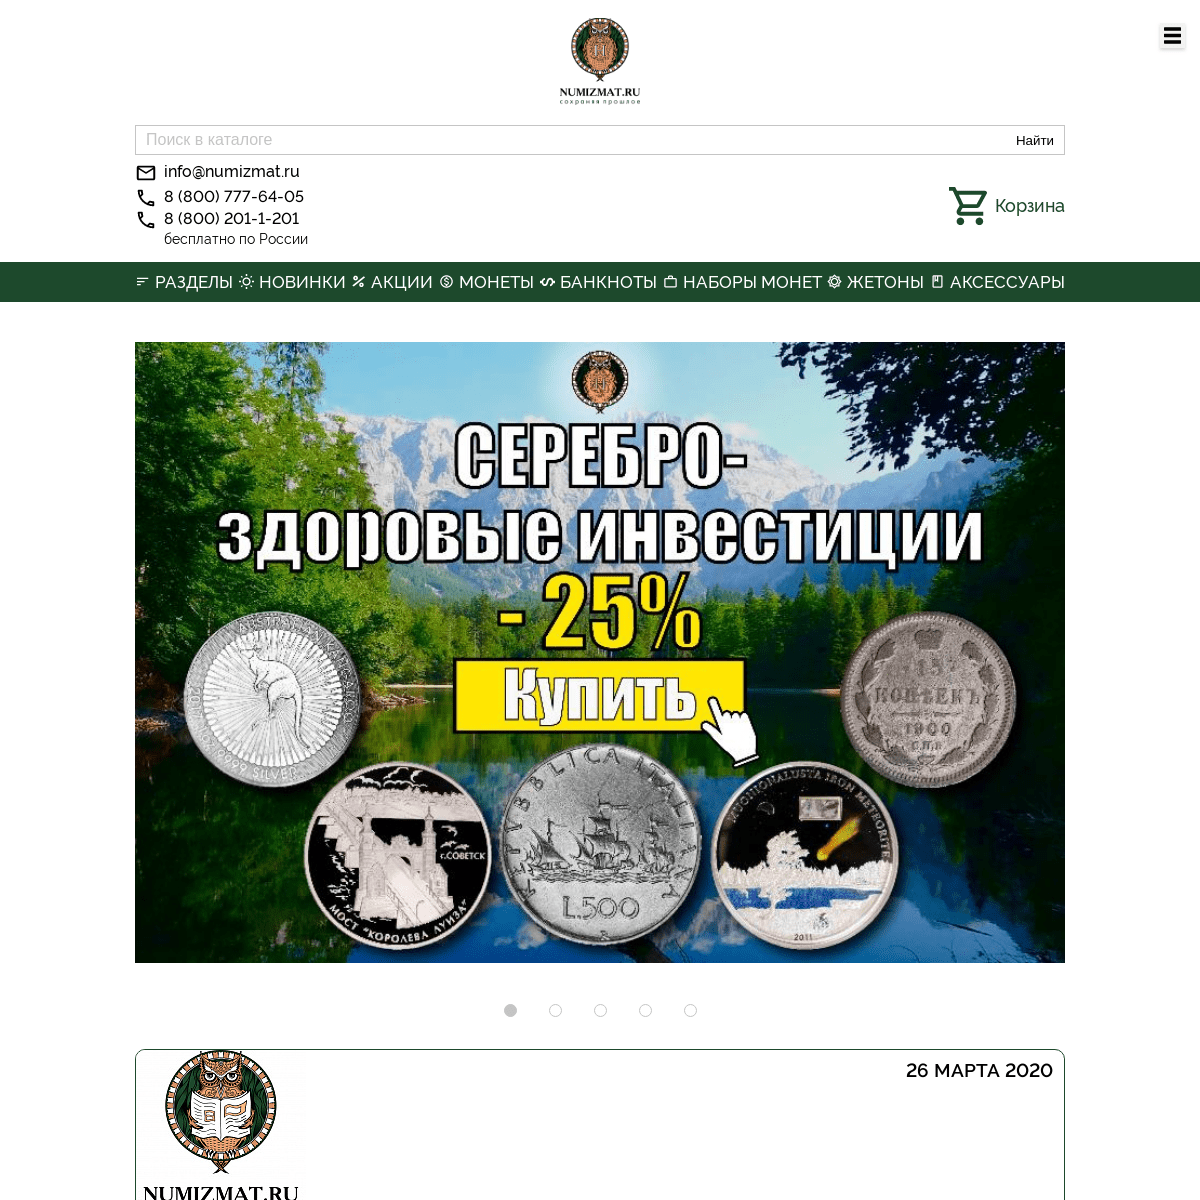 A complete backup of numizmat.ru